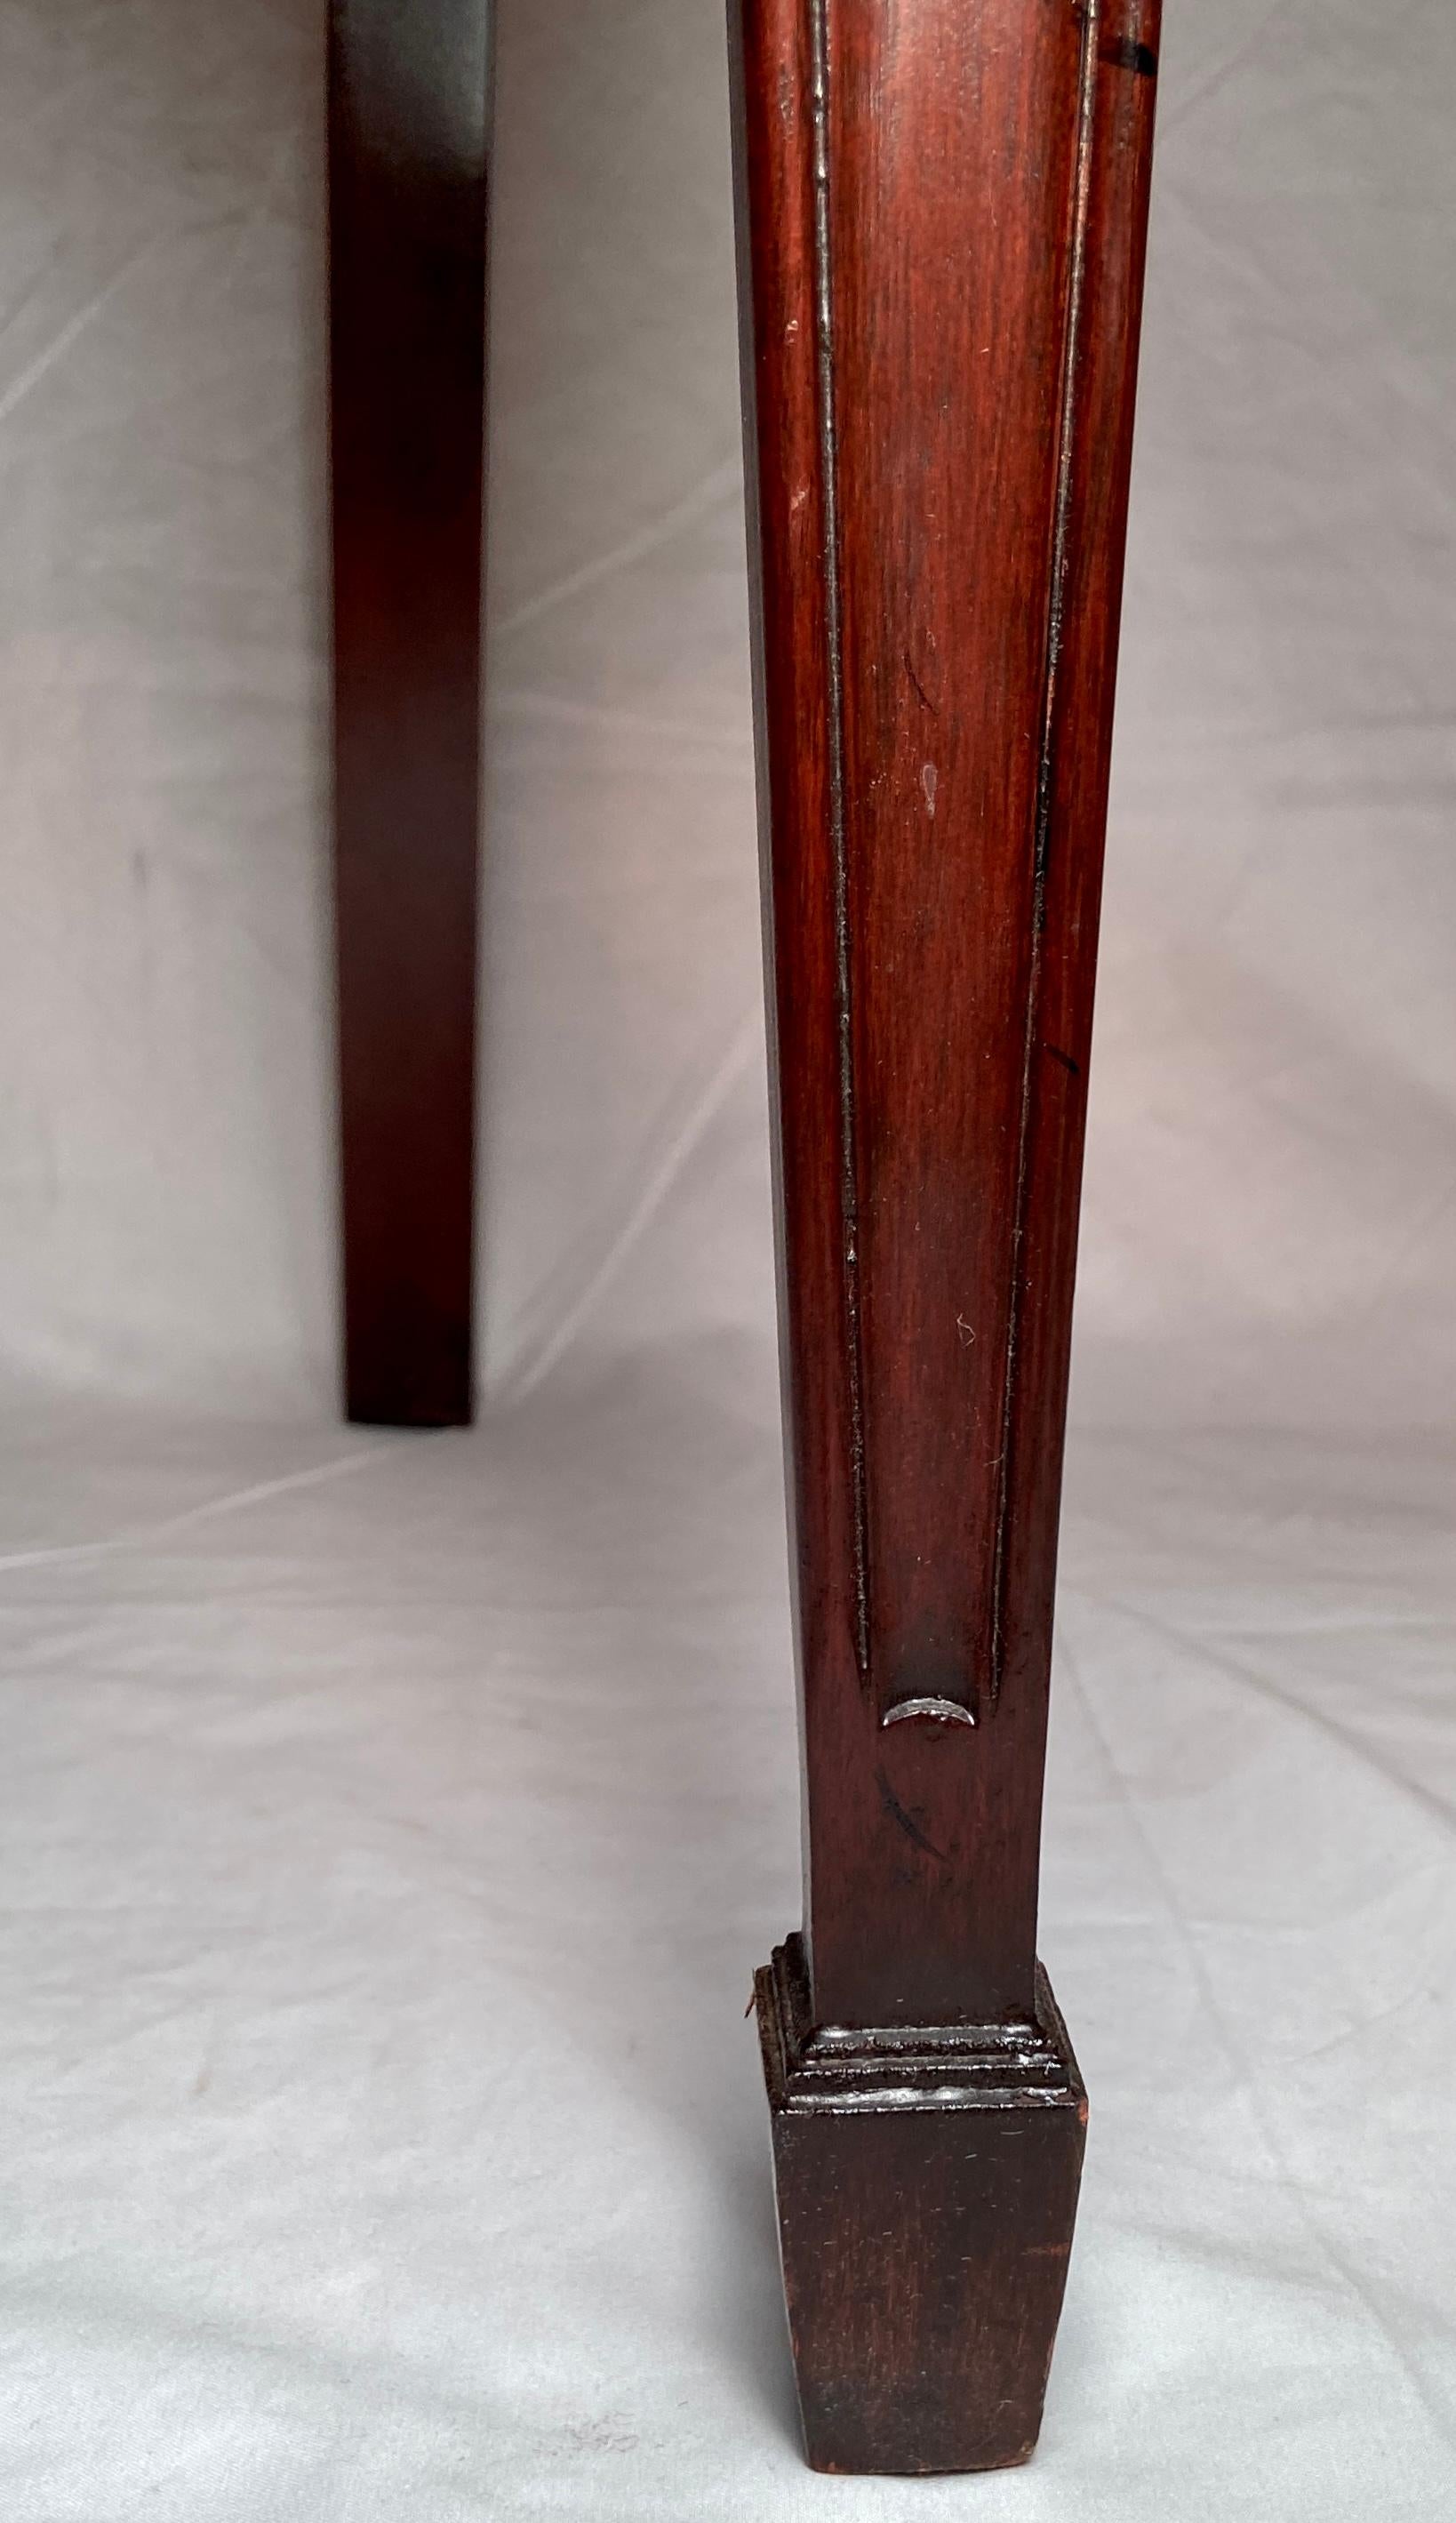 Set of 10 English Mahogany Hepplewhite Shield-Back Dining Chairs, Circa 1940-50 6